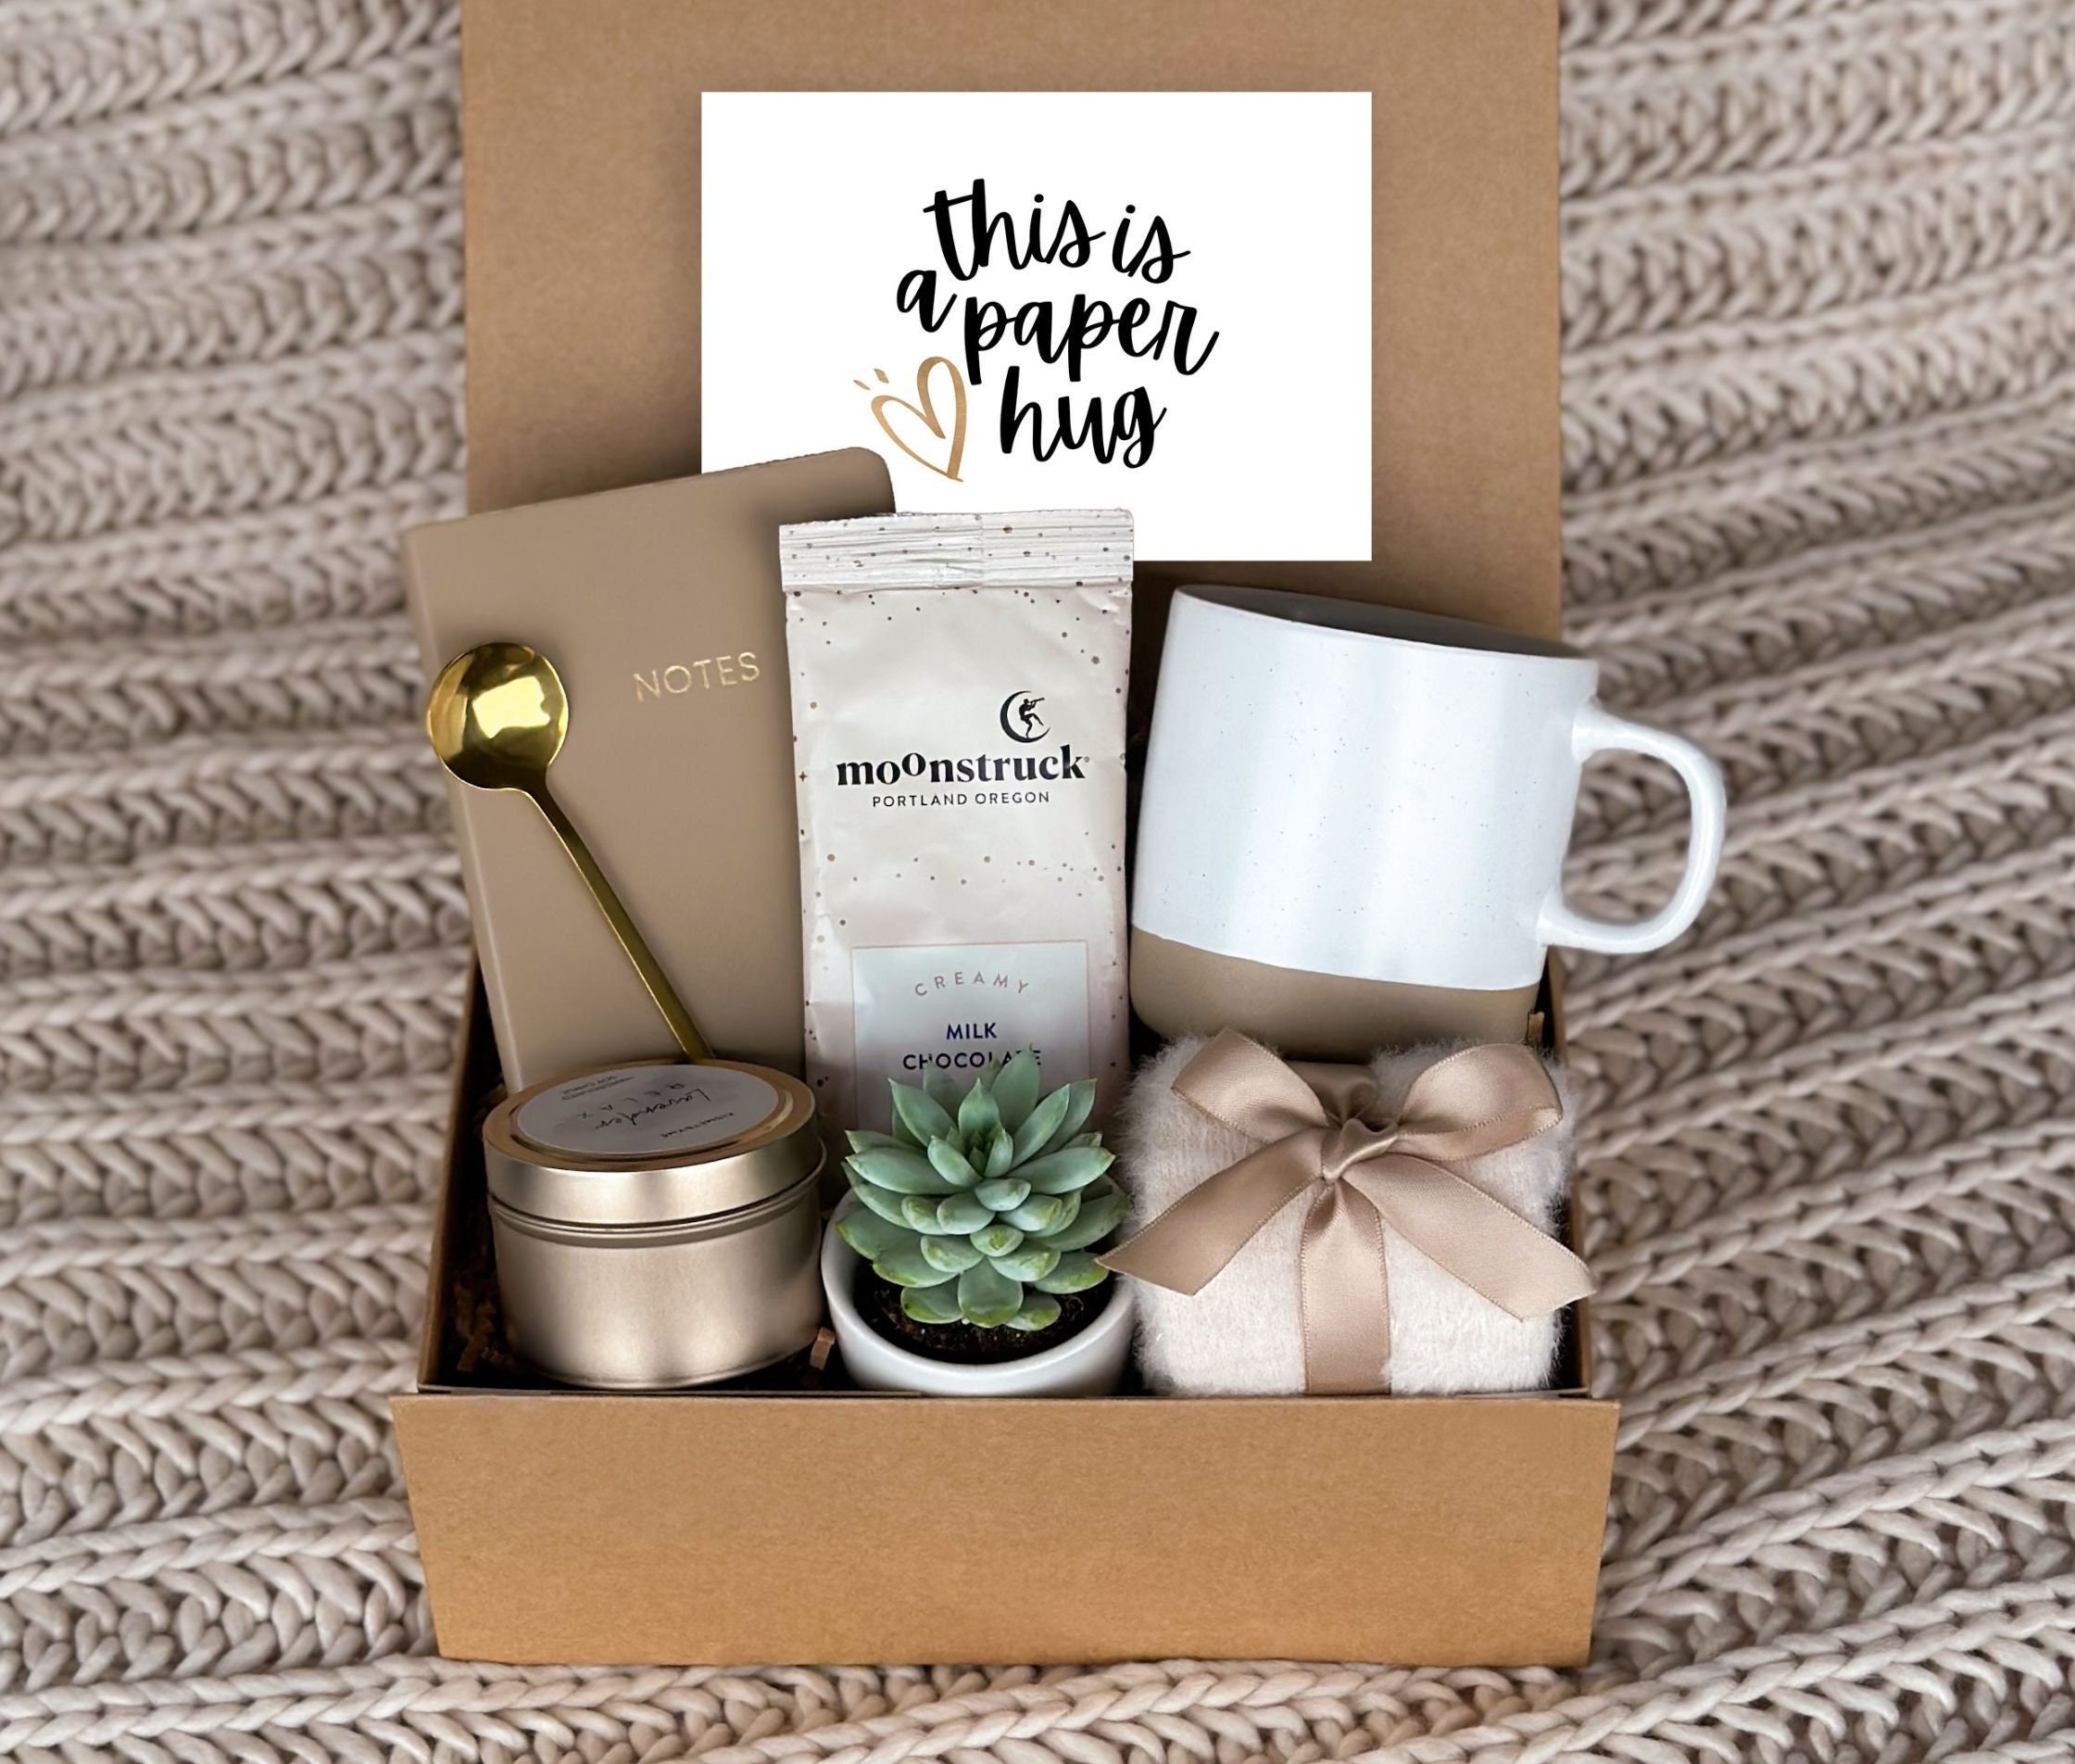 Hug in a Mug Coffee Lover Gift Basket | Thinking of You Gift Box